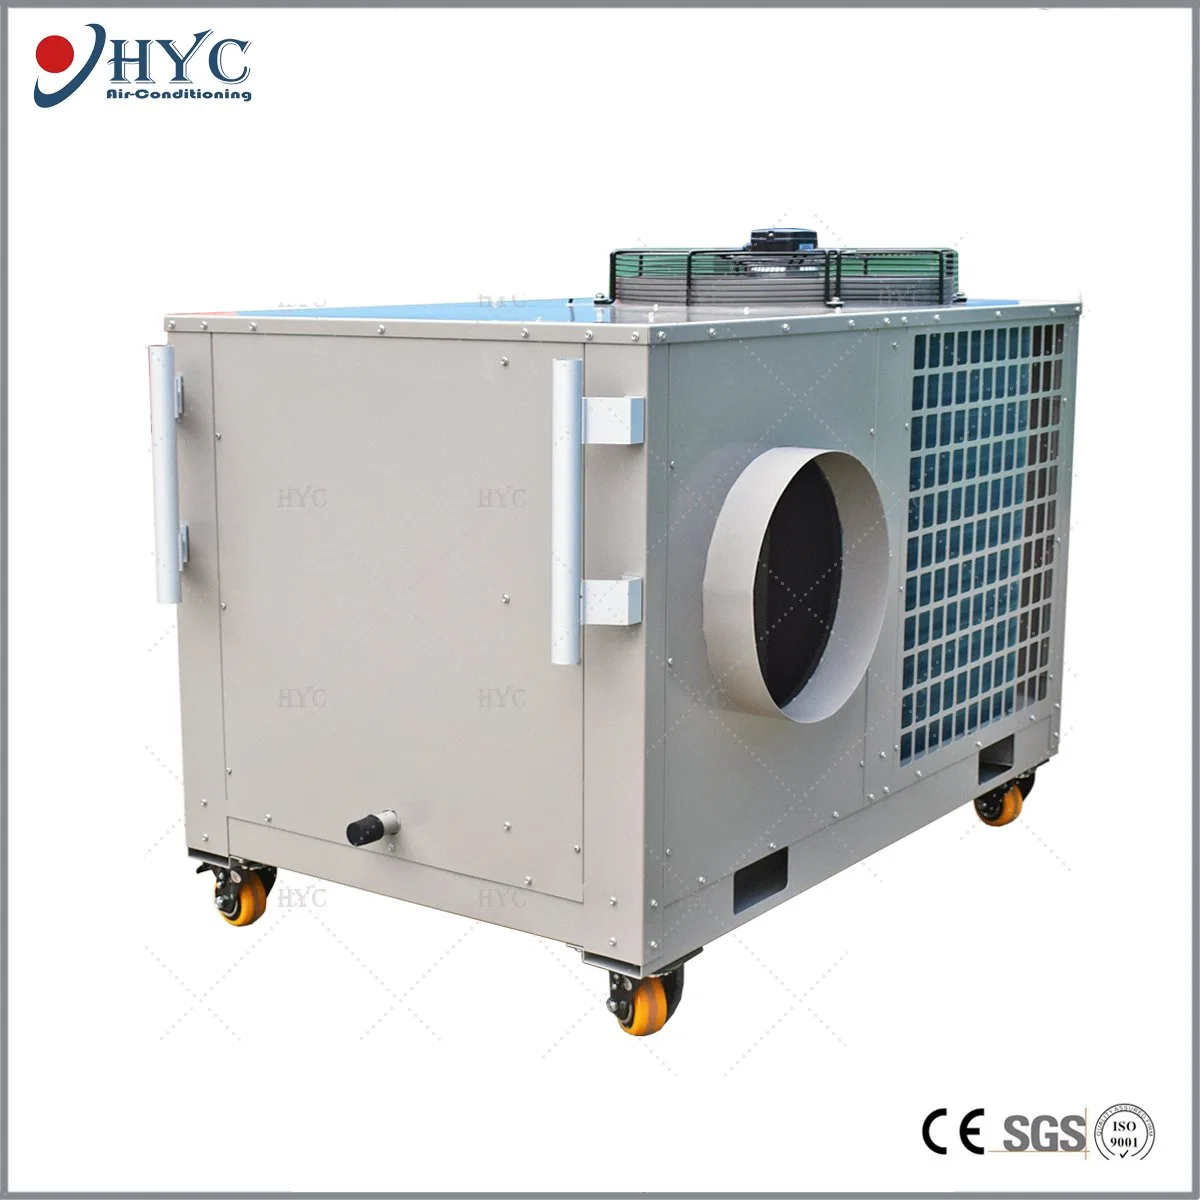 Energy-Efficient DC Inverter Mobile Air Conditioner Portable AC